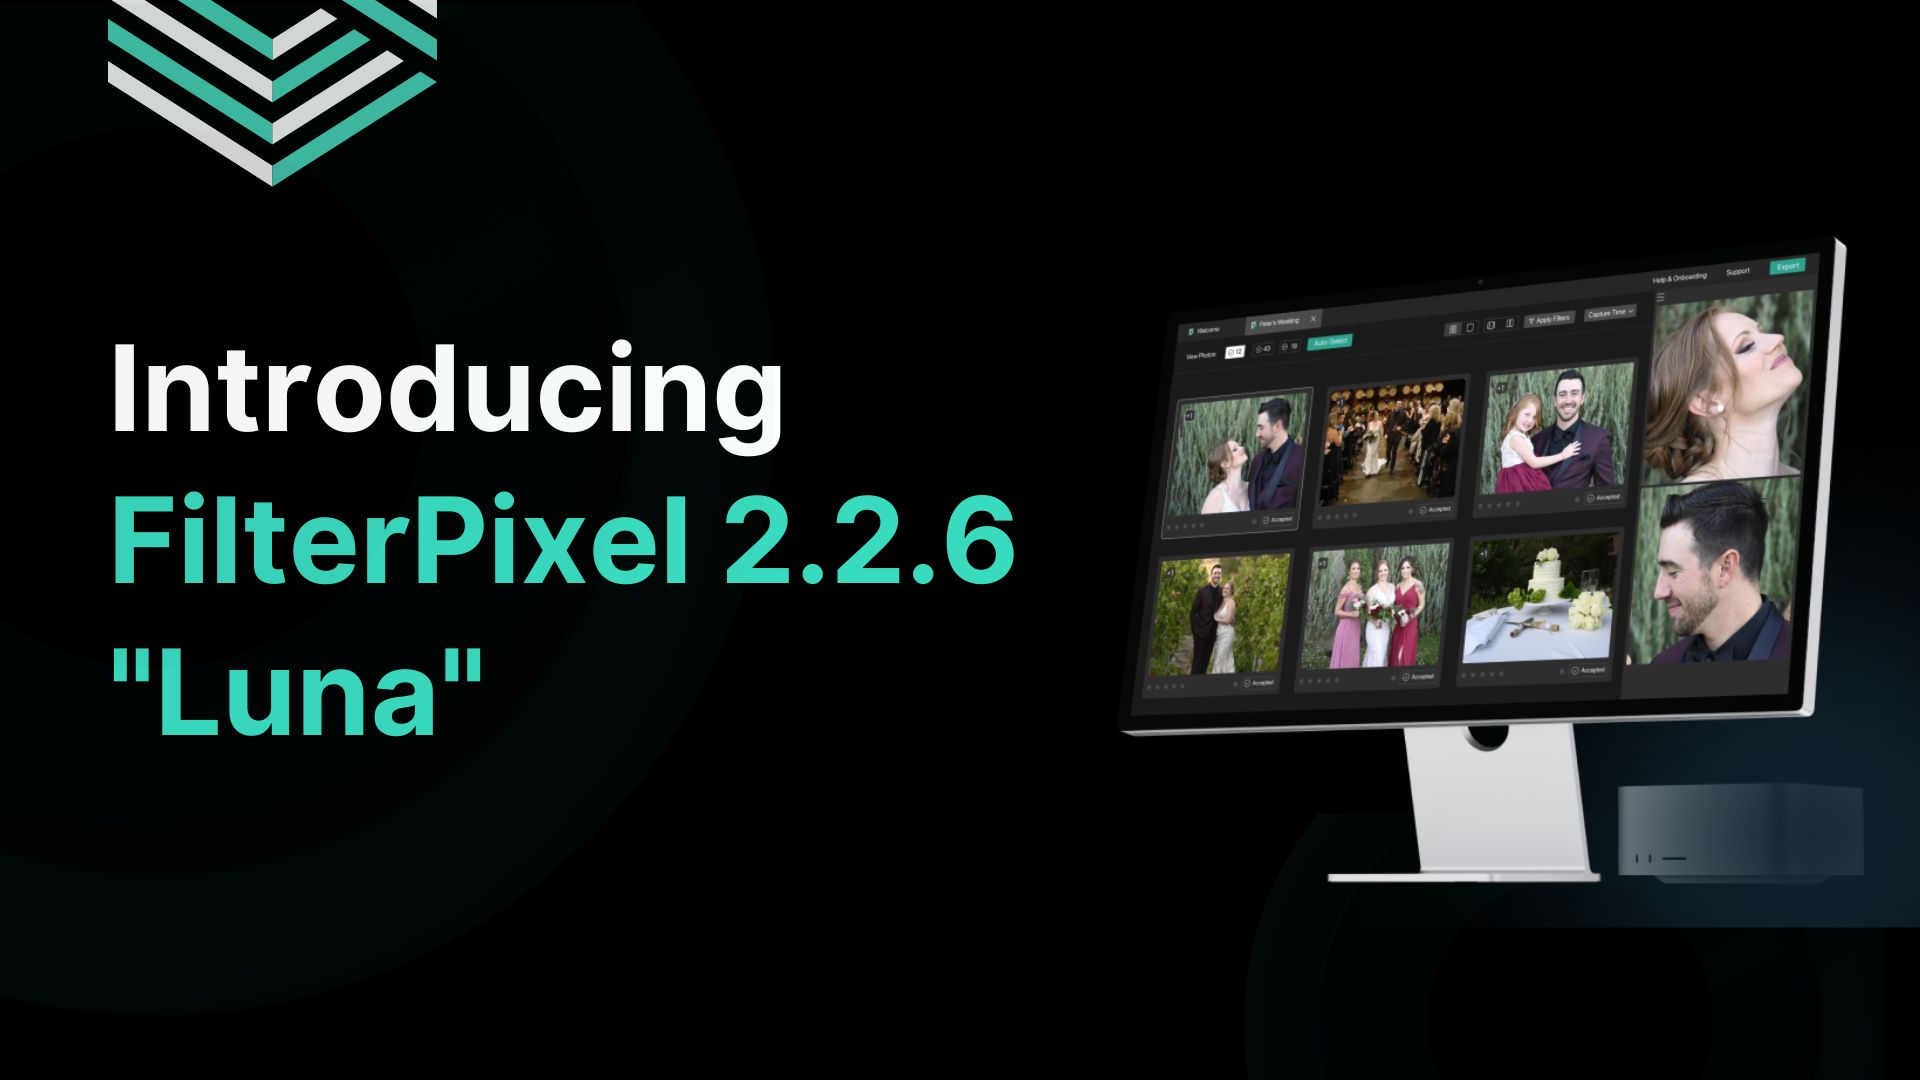 FilterPixel 2.2.6 